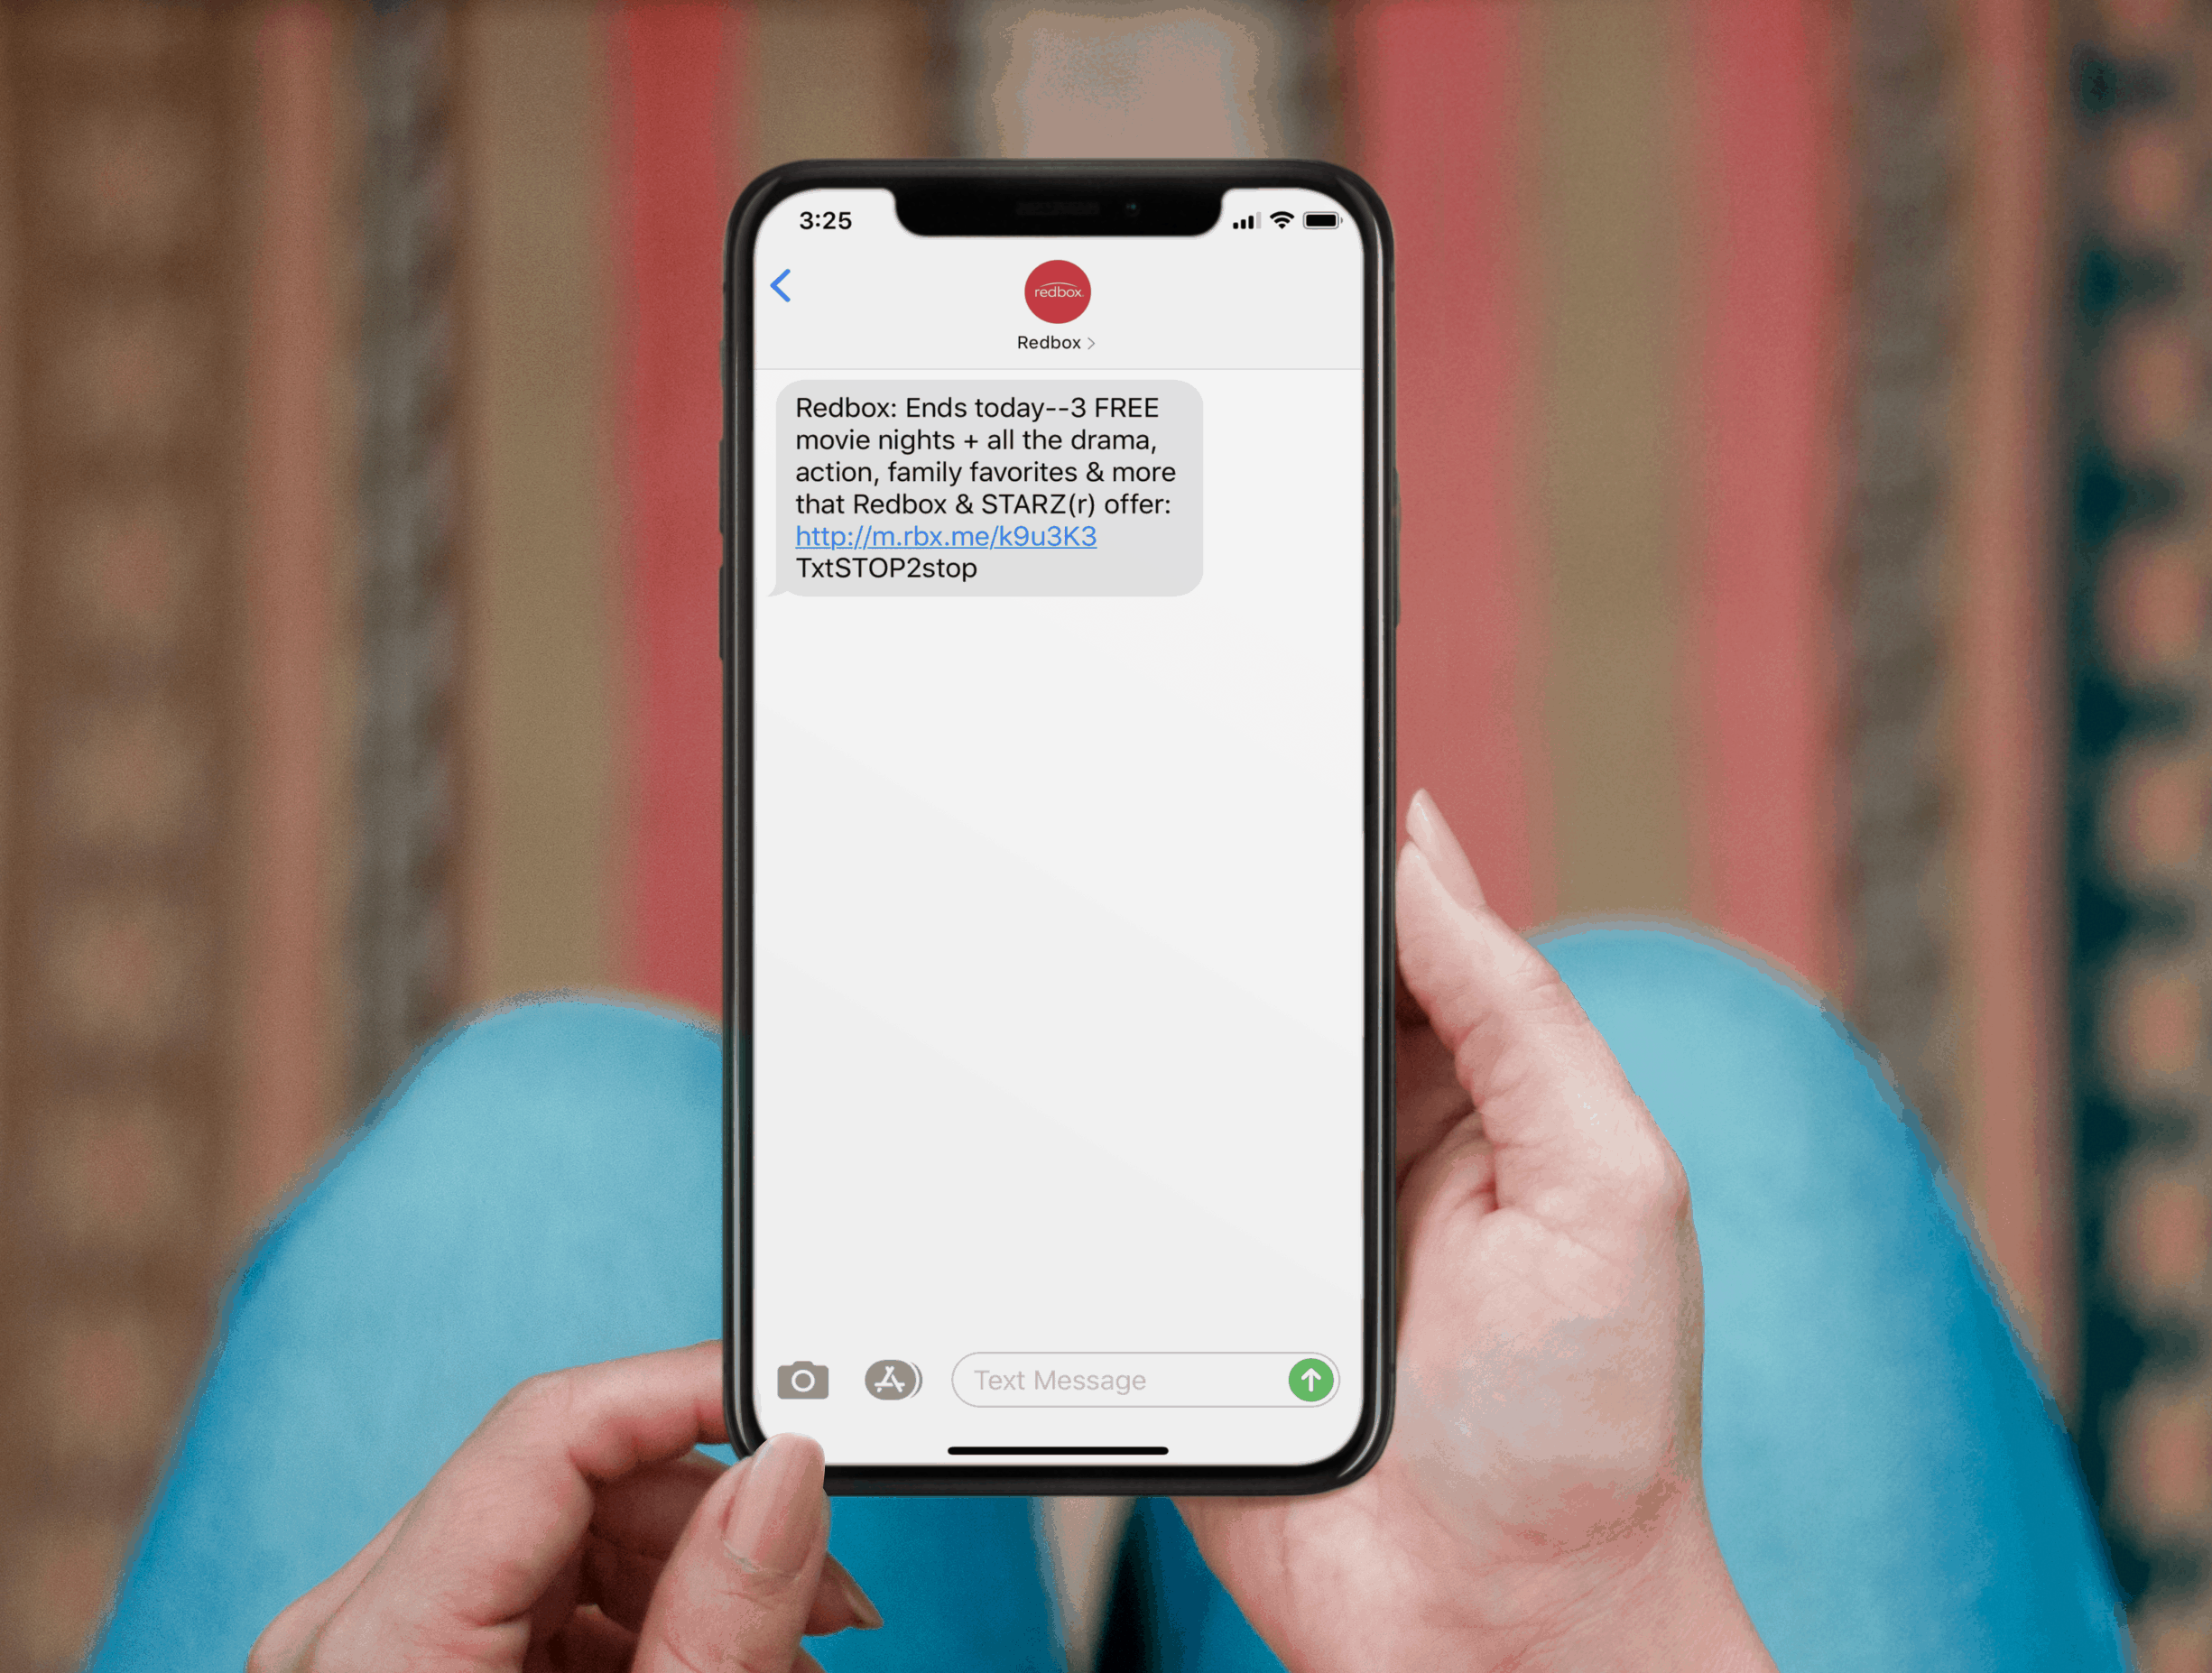 Redbox Using Link Shortener for SMS Marketing Messages